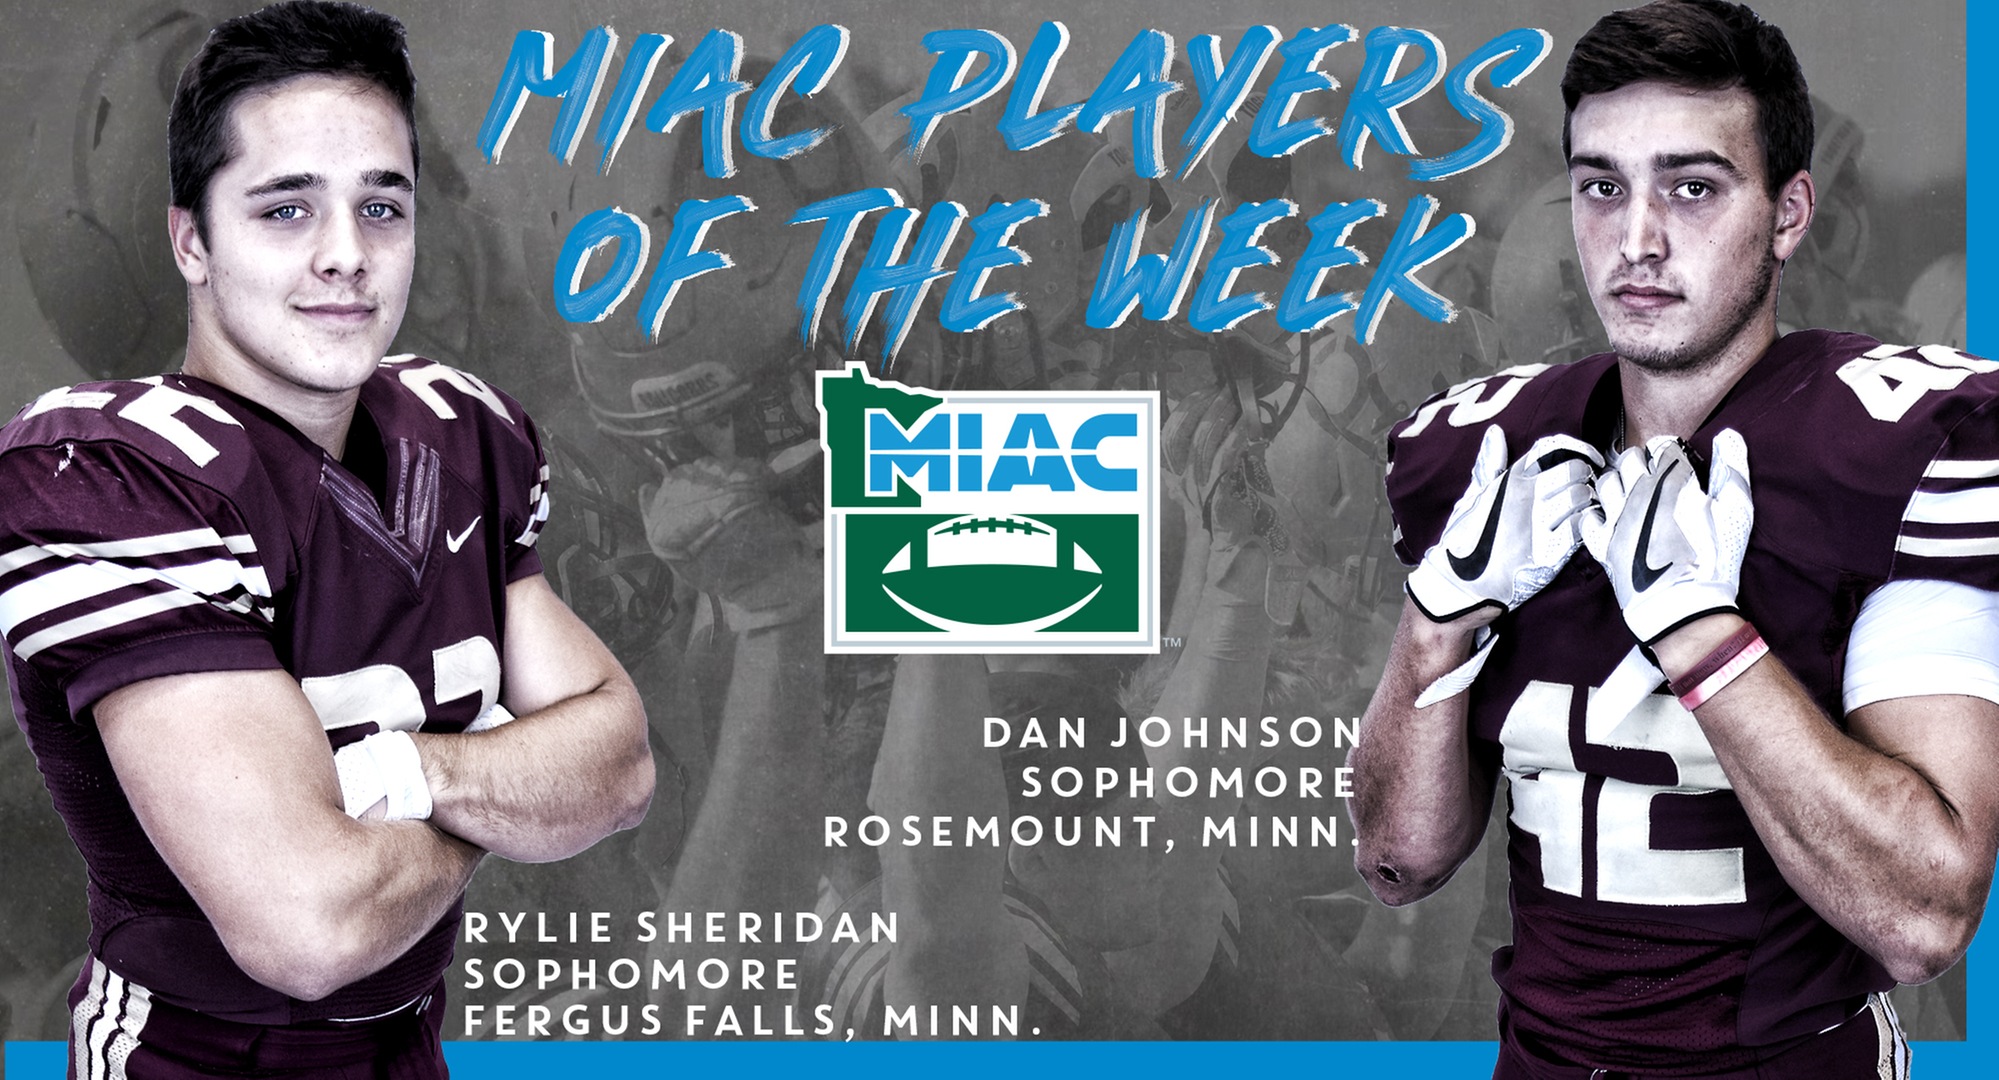 Rylie Sheridan (L) and Dan Johnson were named MIAC Players of the Week.